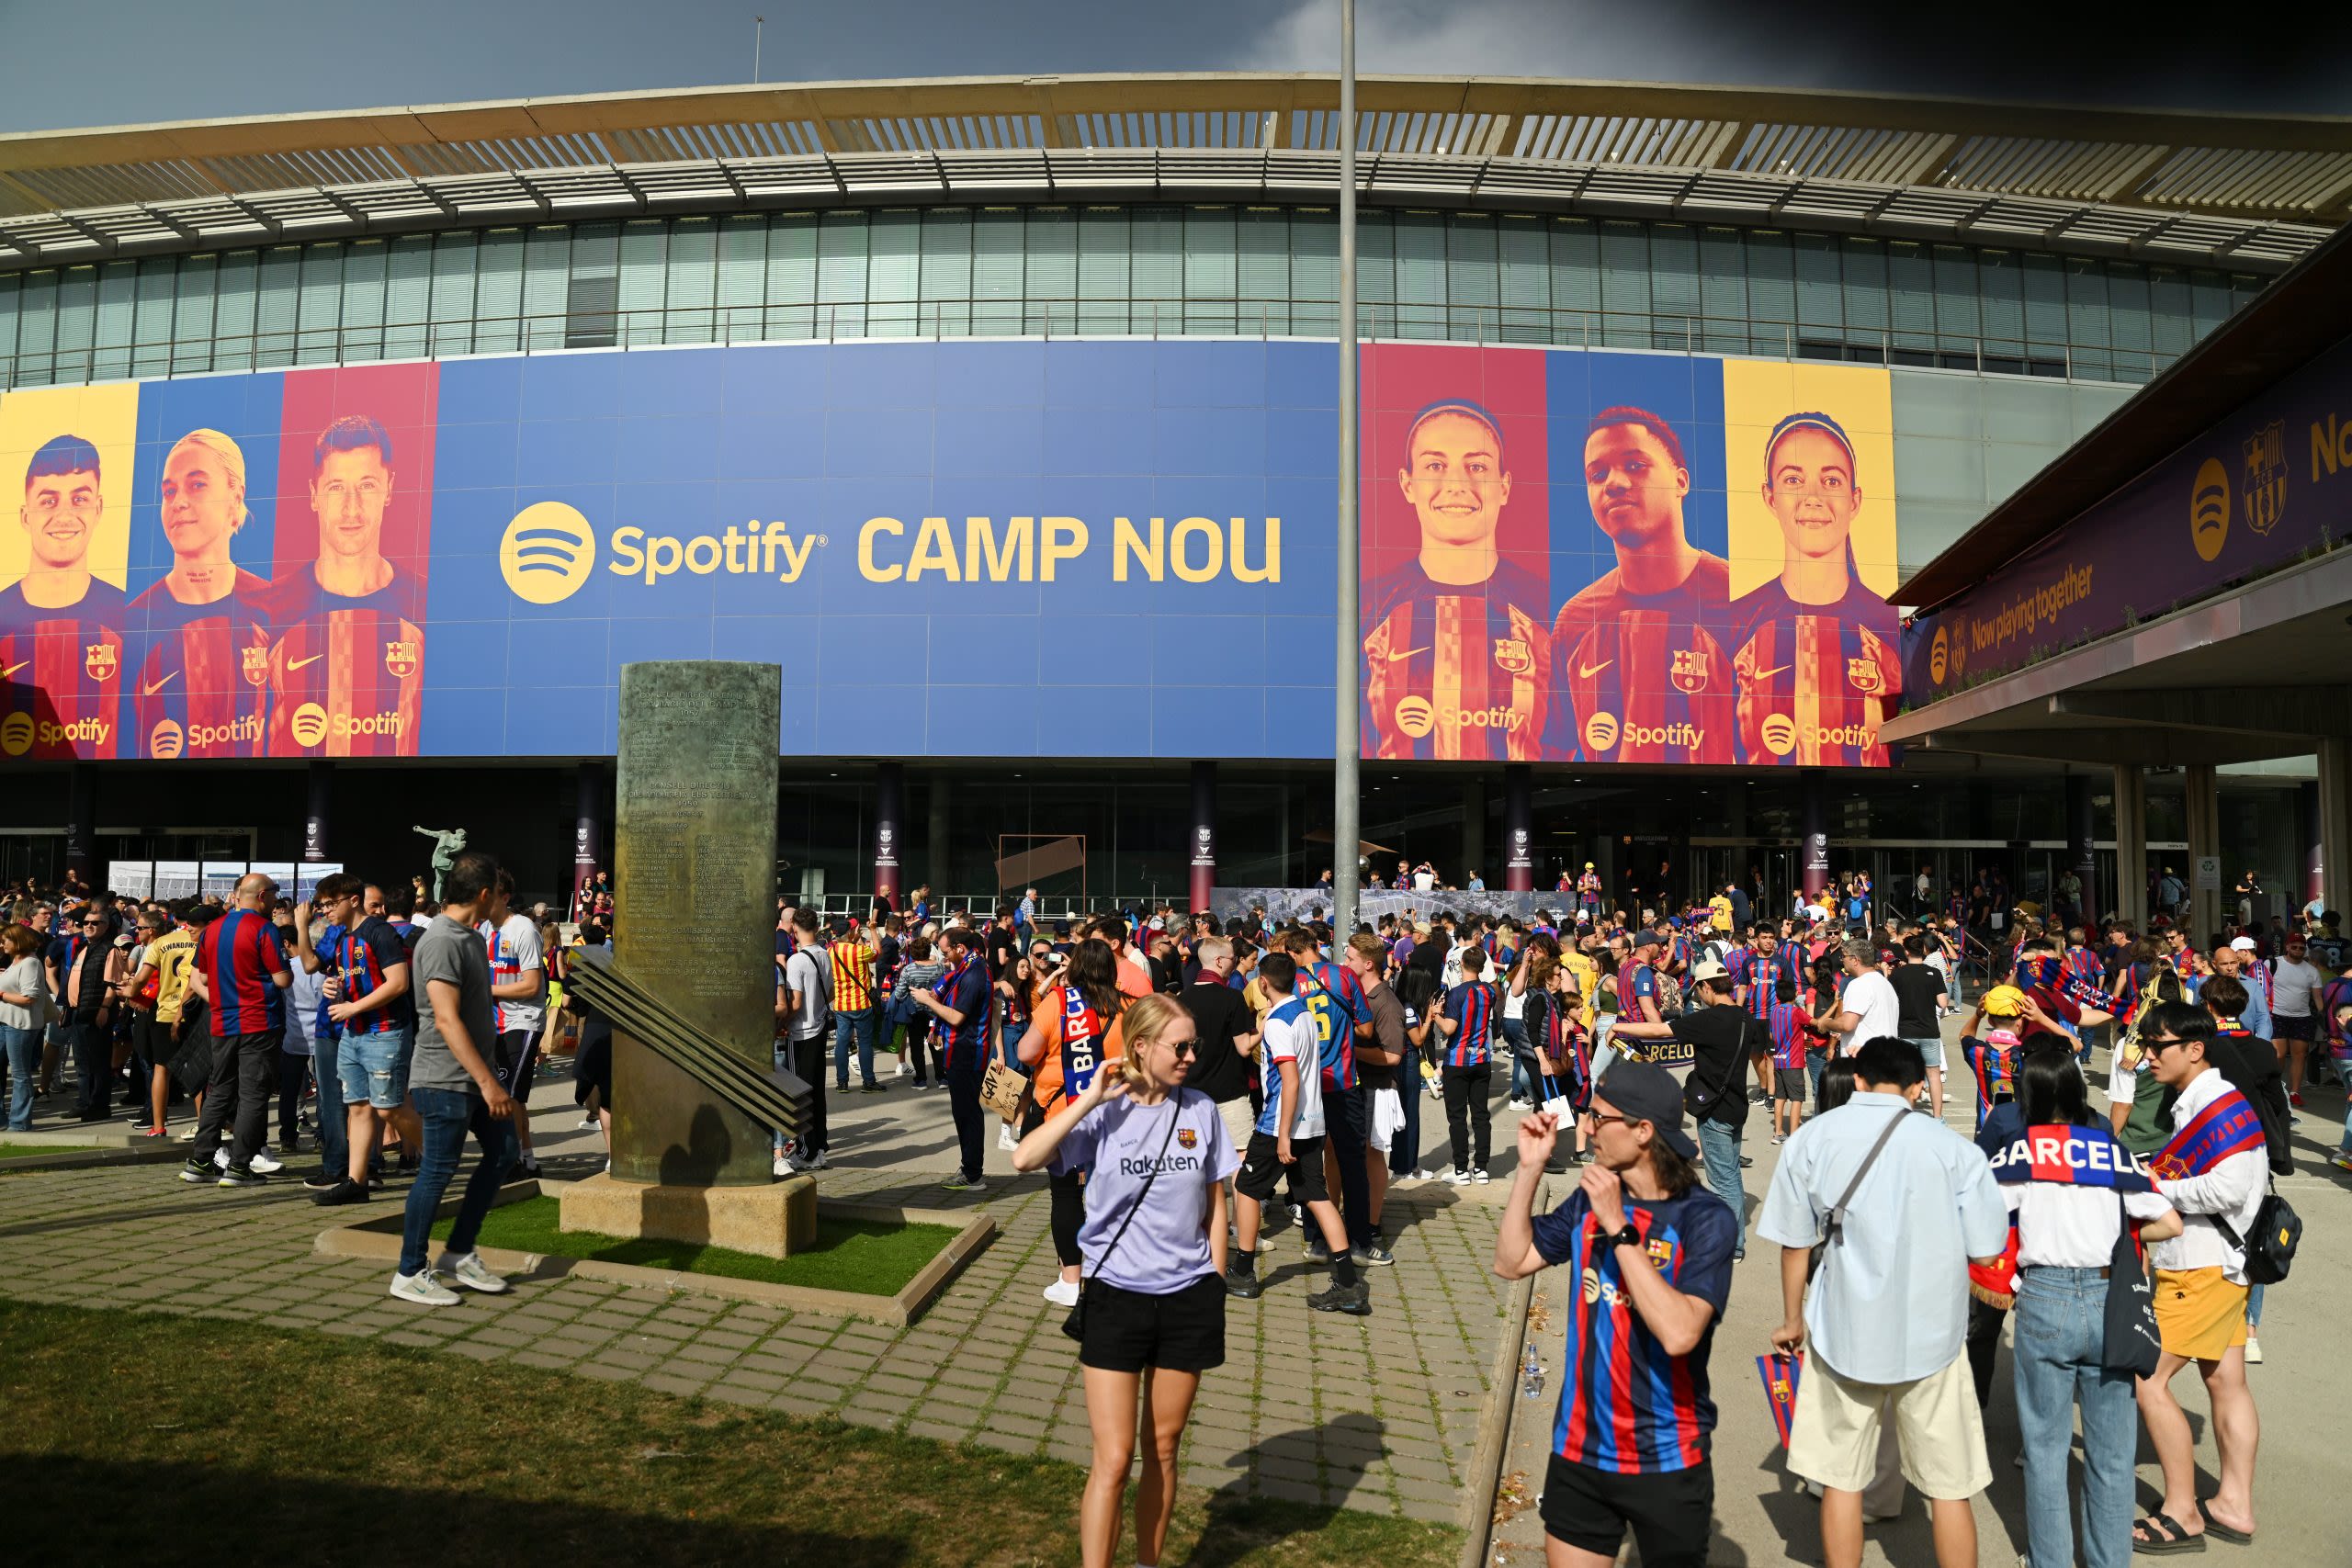 Barcelona vice-president confirms plans for Spotify Camp Nou return